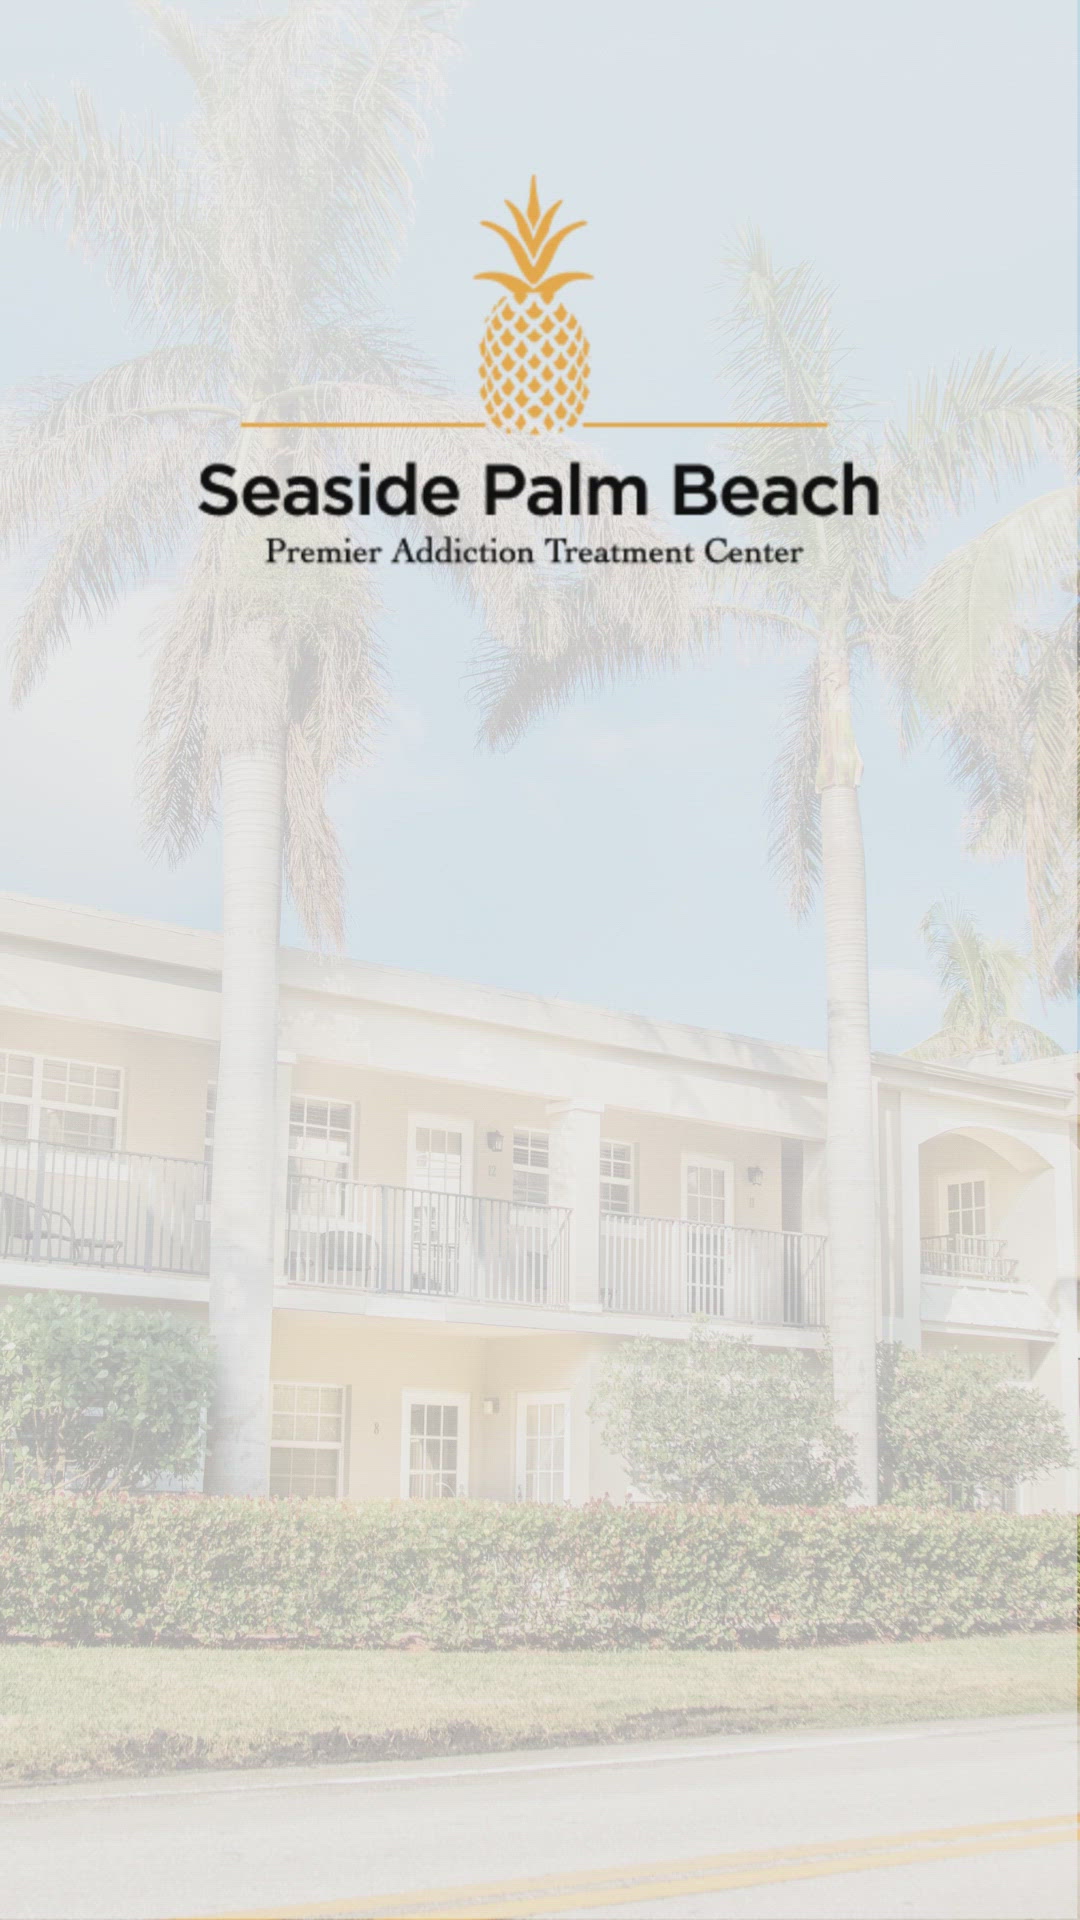 Seaside Palm Beach